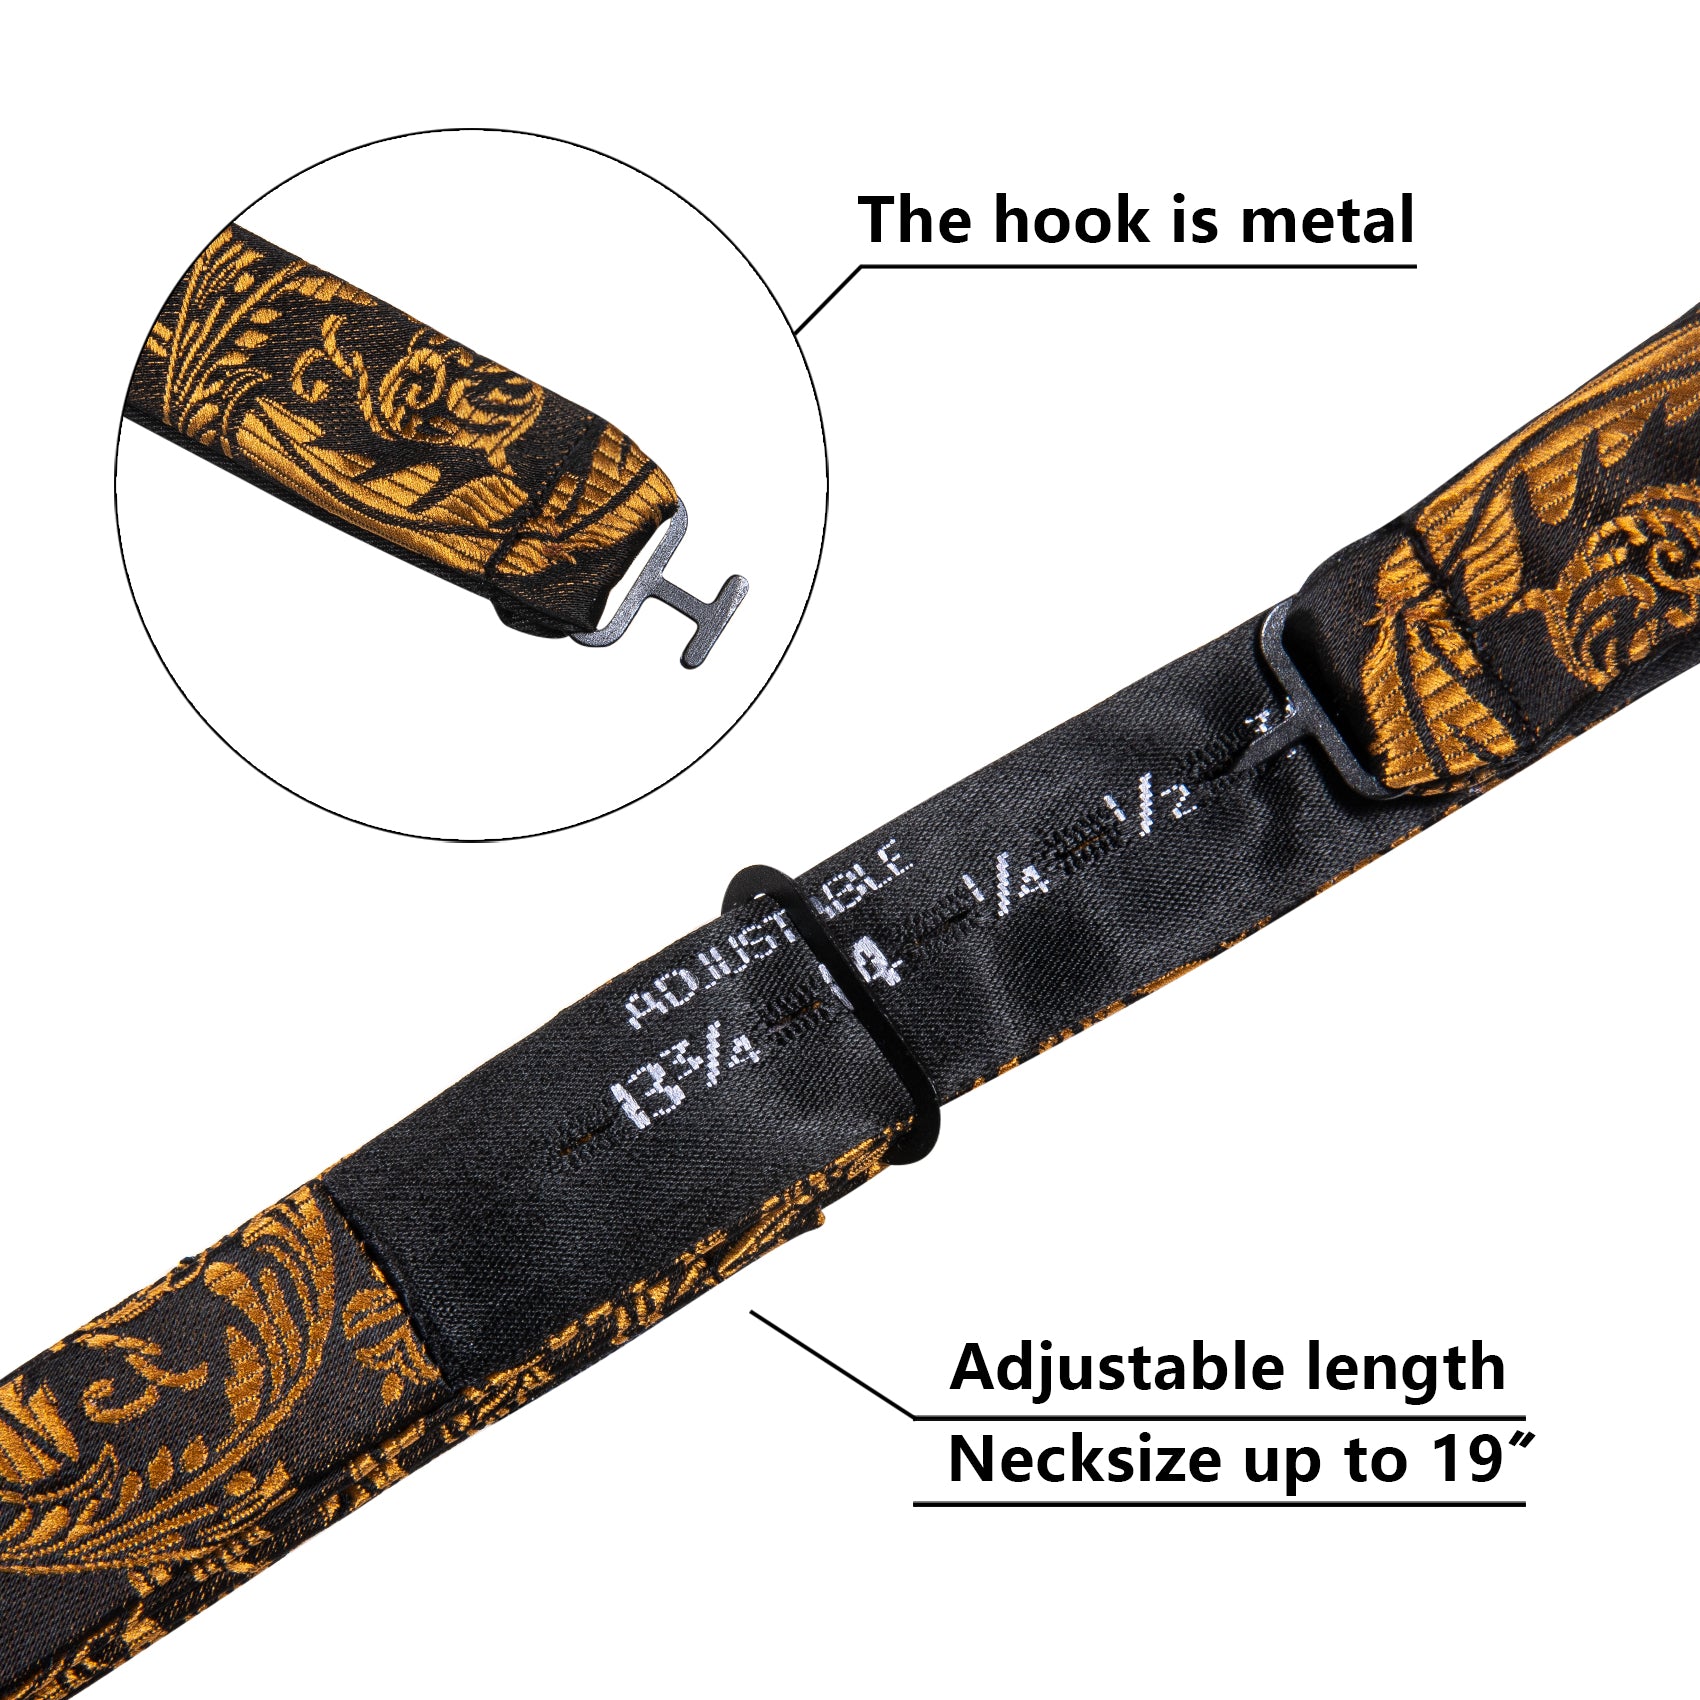 Gold Black Paisley Silk Self Tie Bow Tie Hanky Cufflinks Set